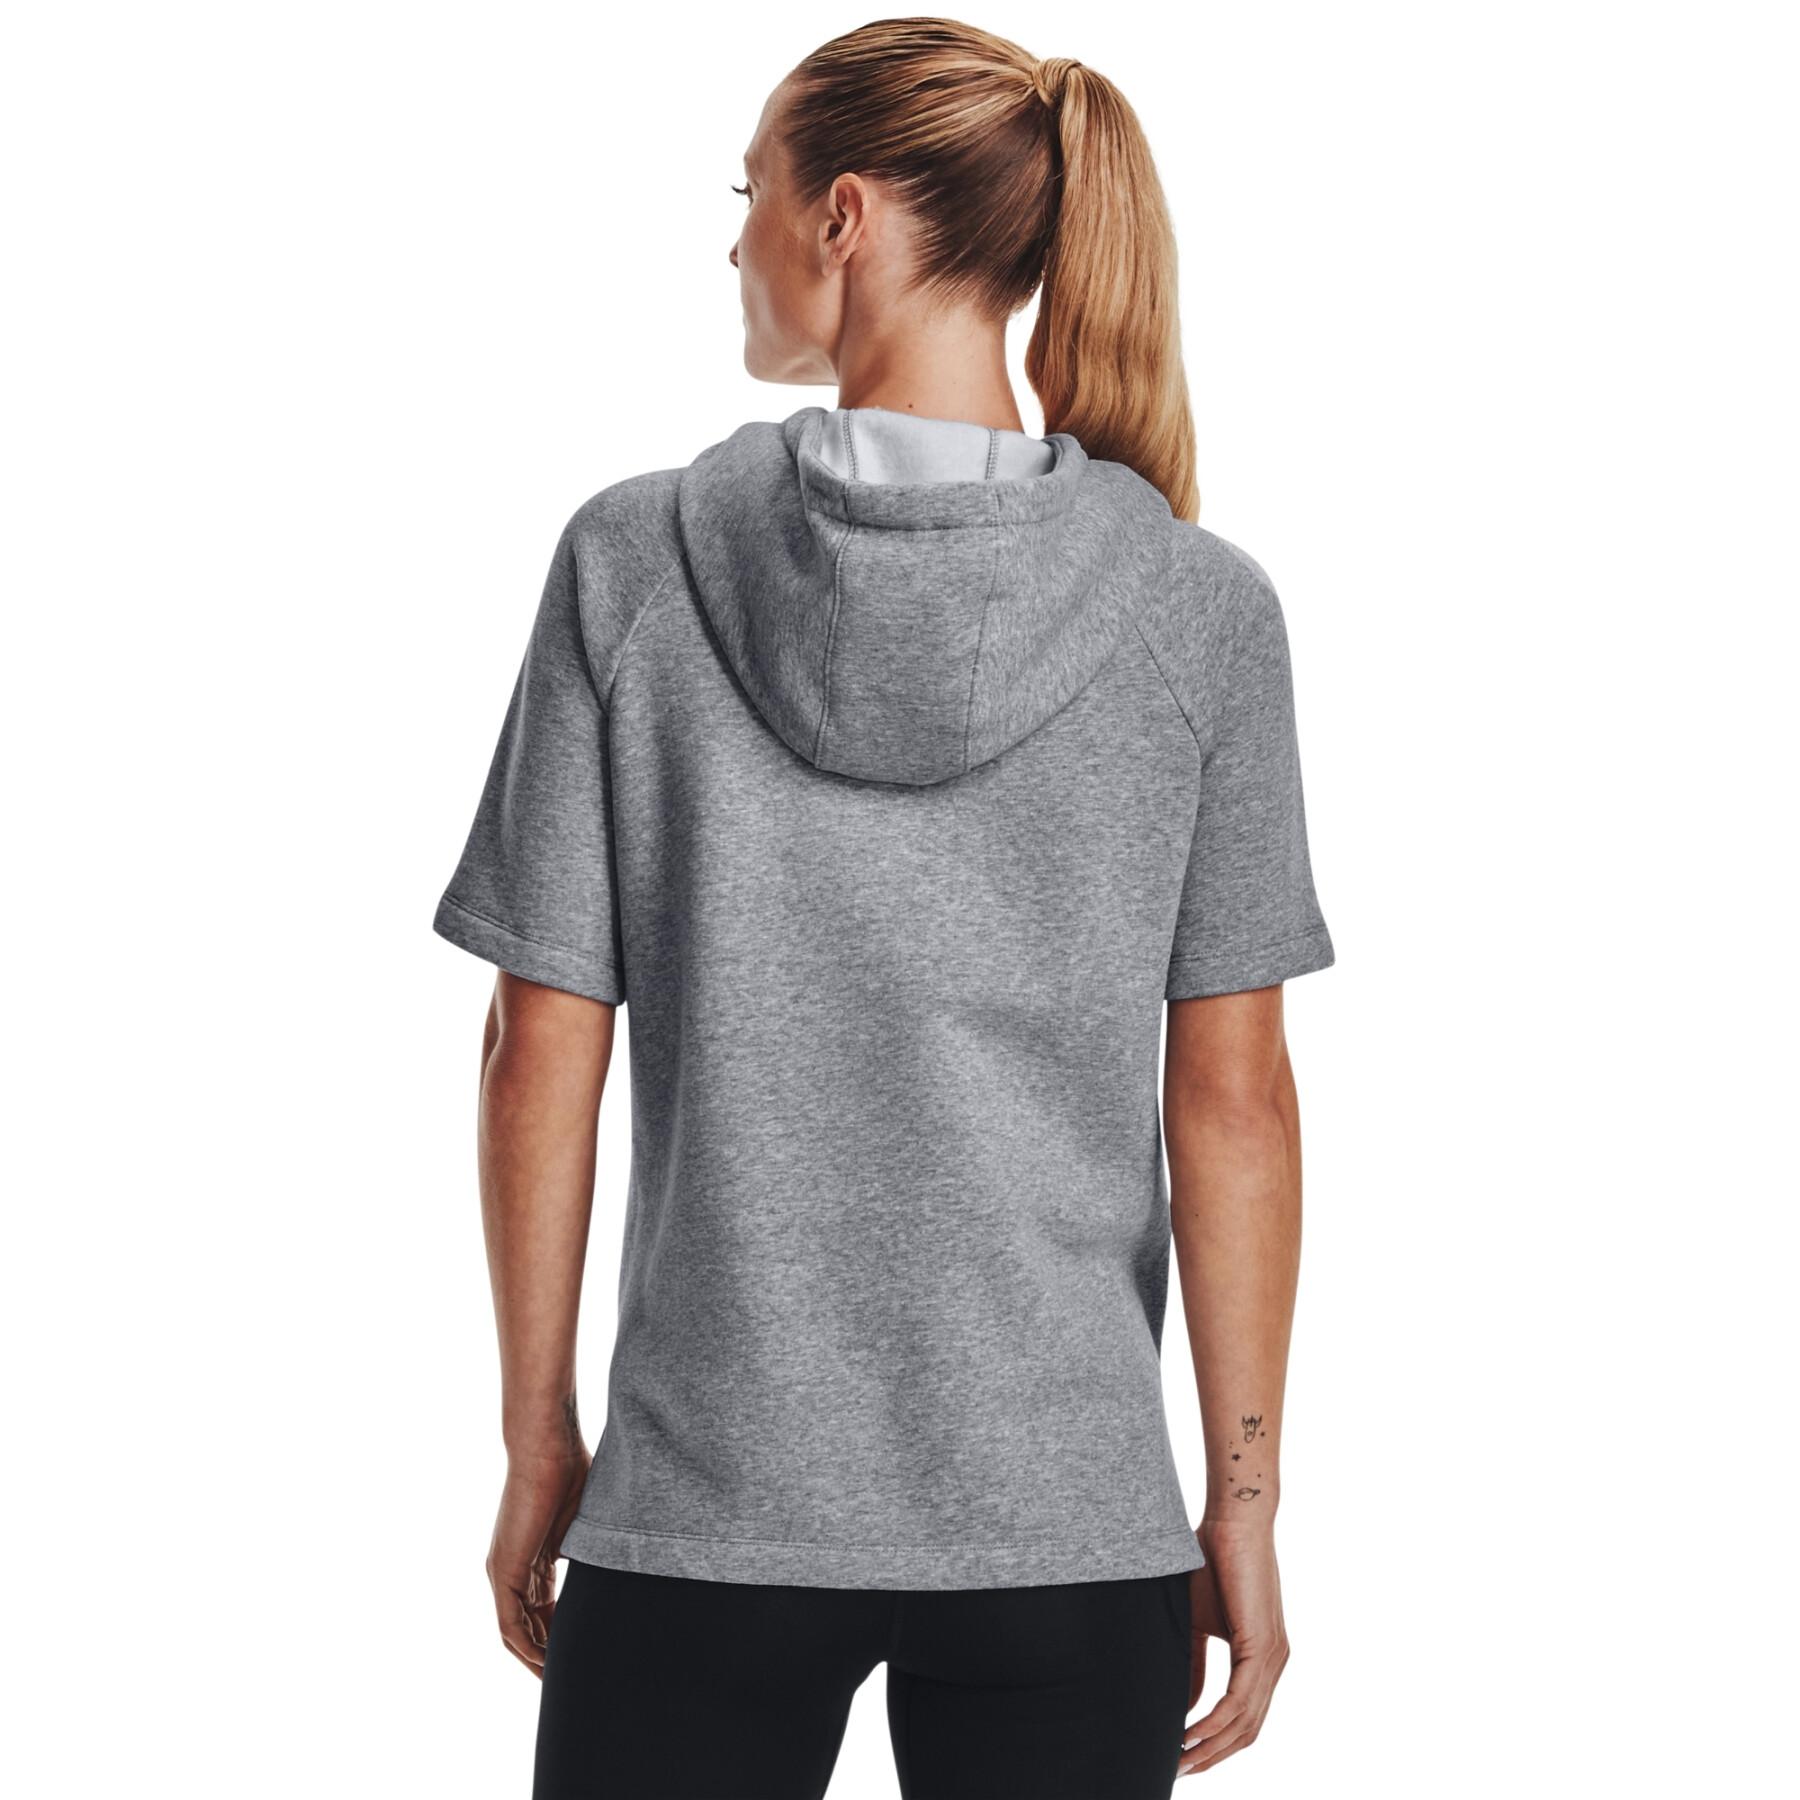 Women's hooded sweatshirt Under Armour Rival fleece